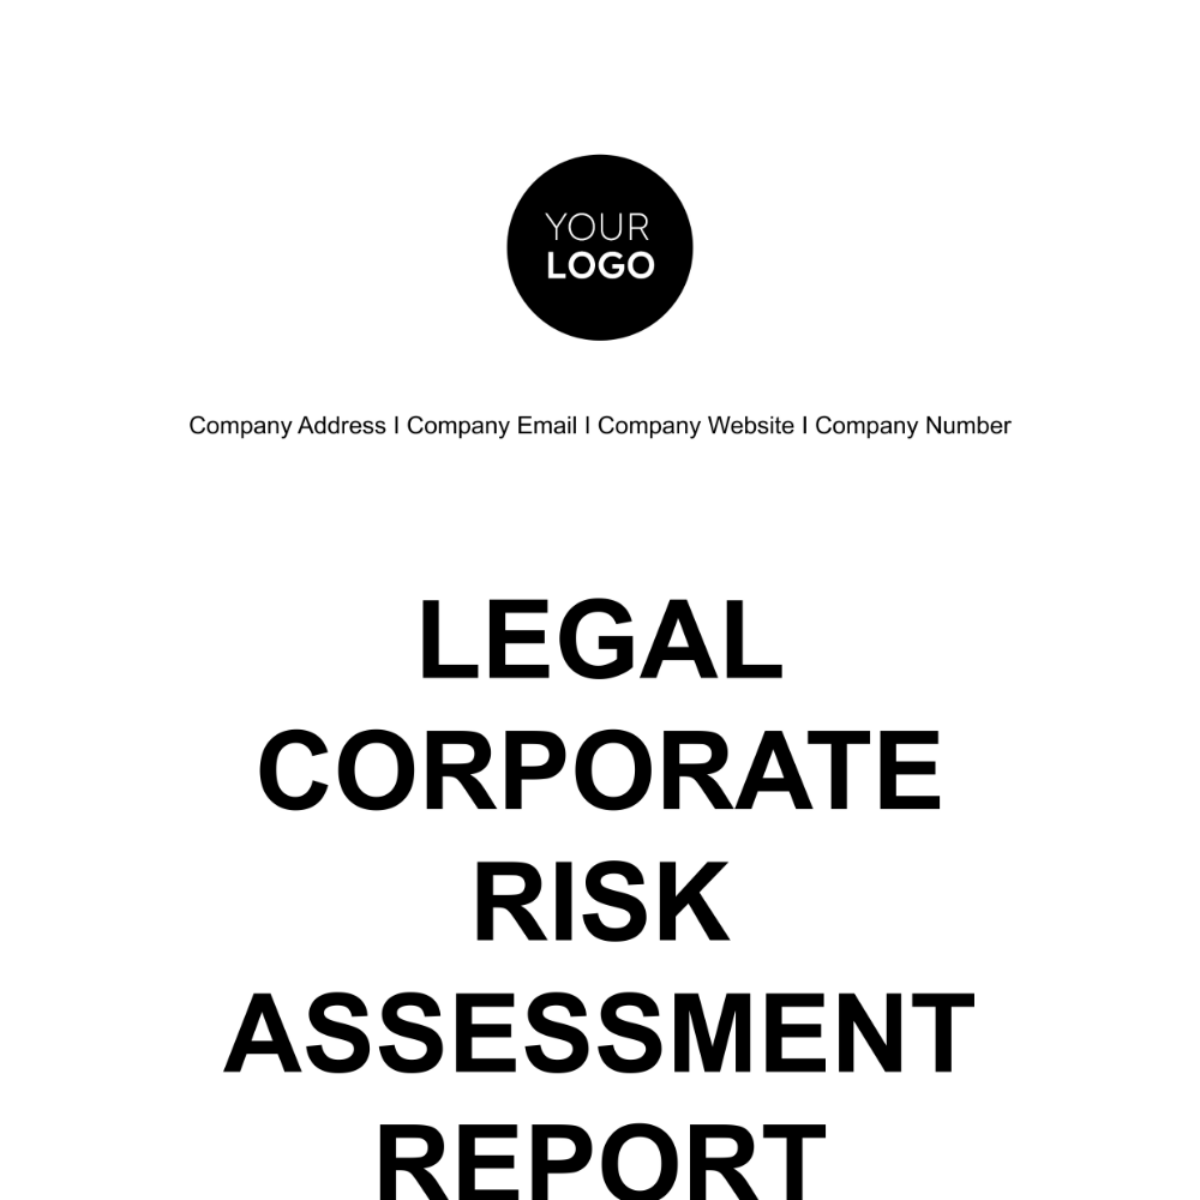 Legal Corporate Risk Assessment Report Template